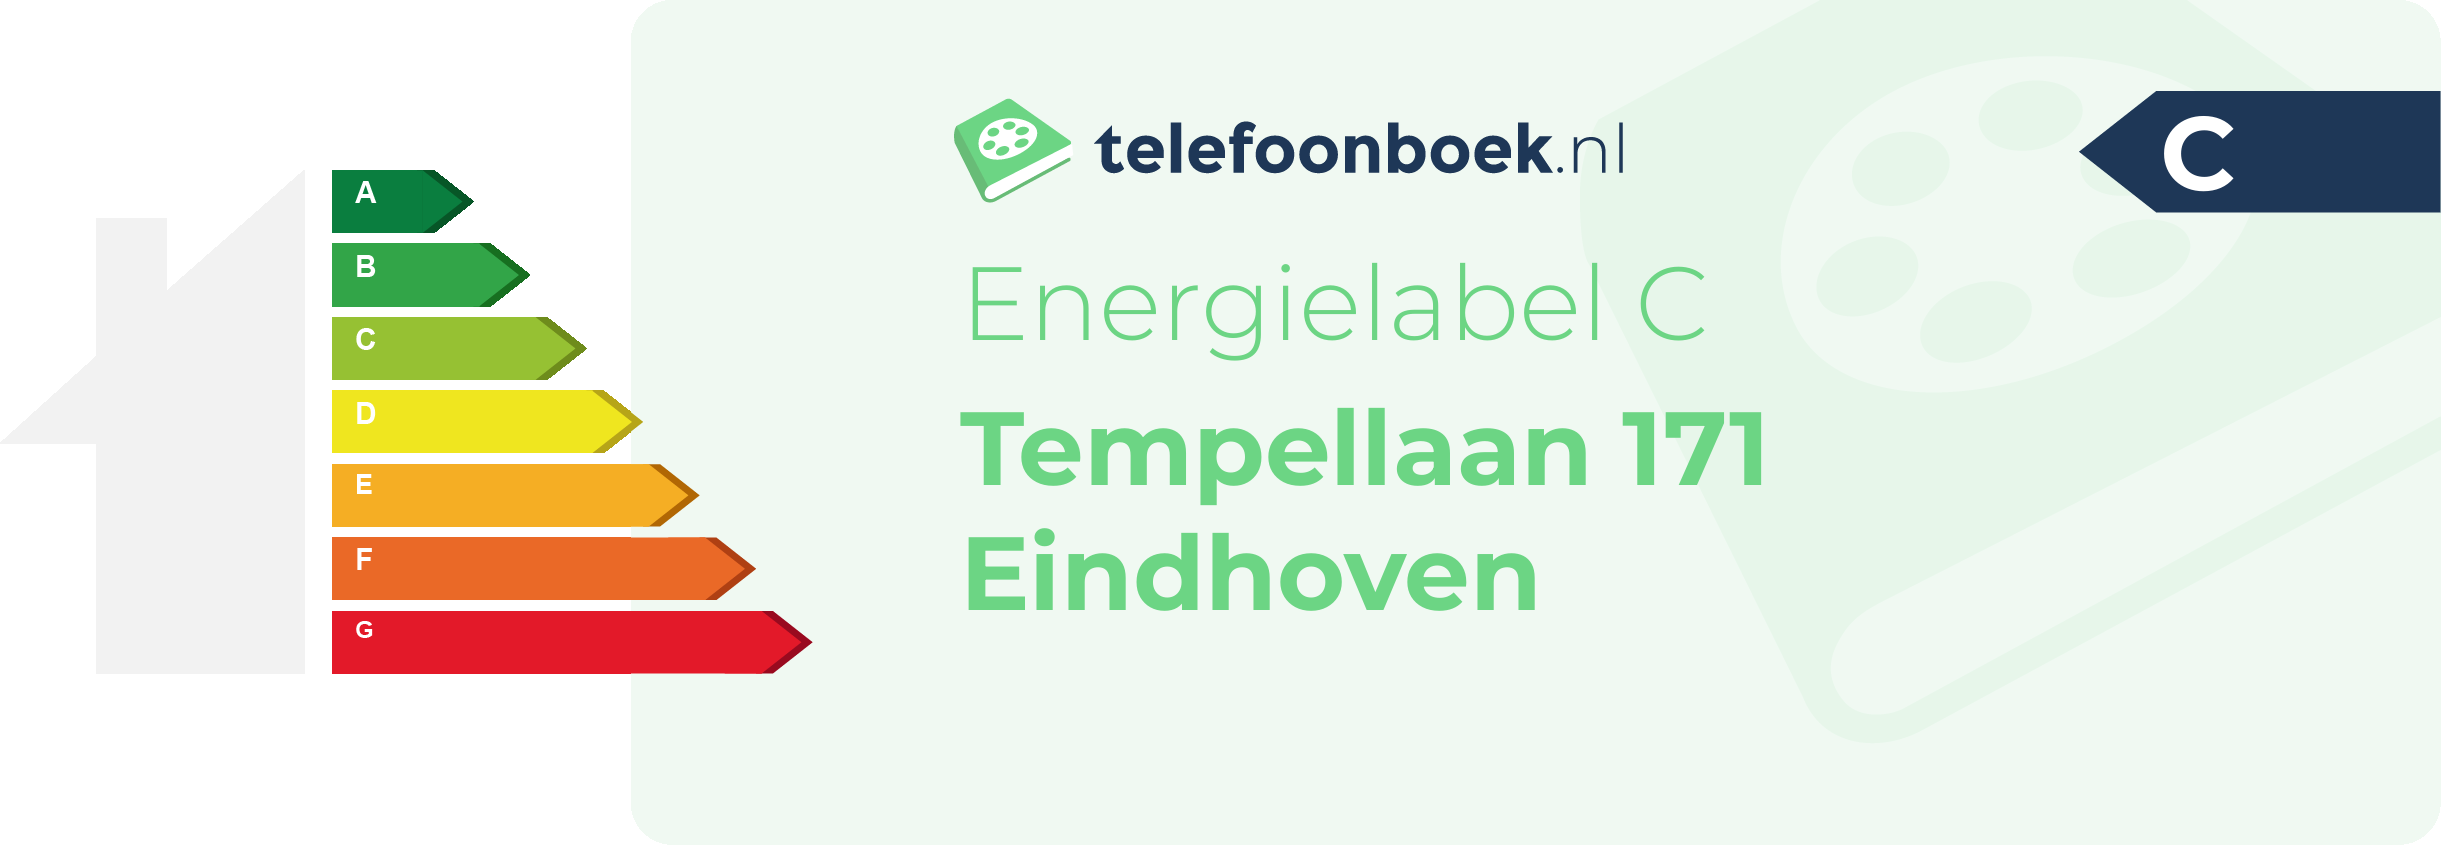 Energielabel Tempellaan 171 Eindhoven